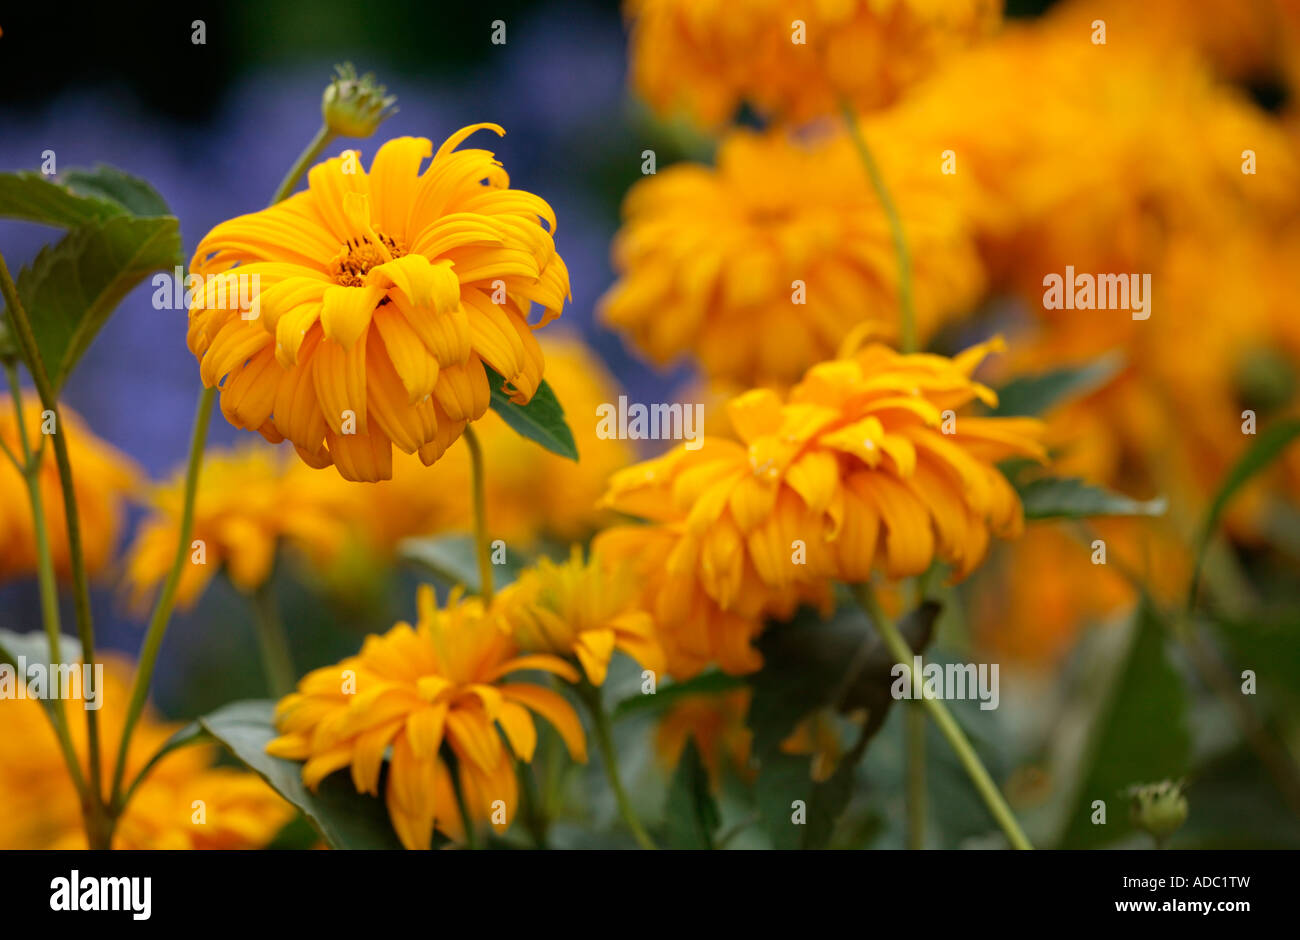 Orange marigolds (Calendula officinalis) against a blackground of blue cornflowers in summer Stock Photo